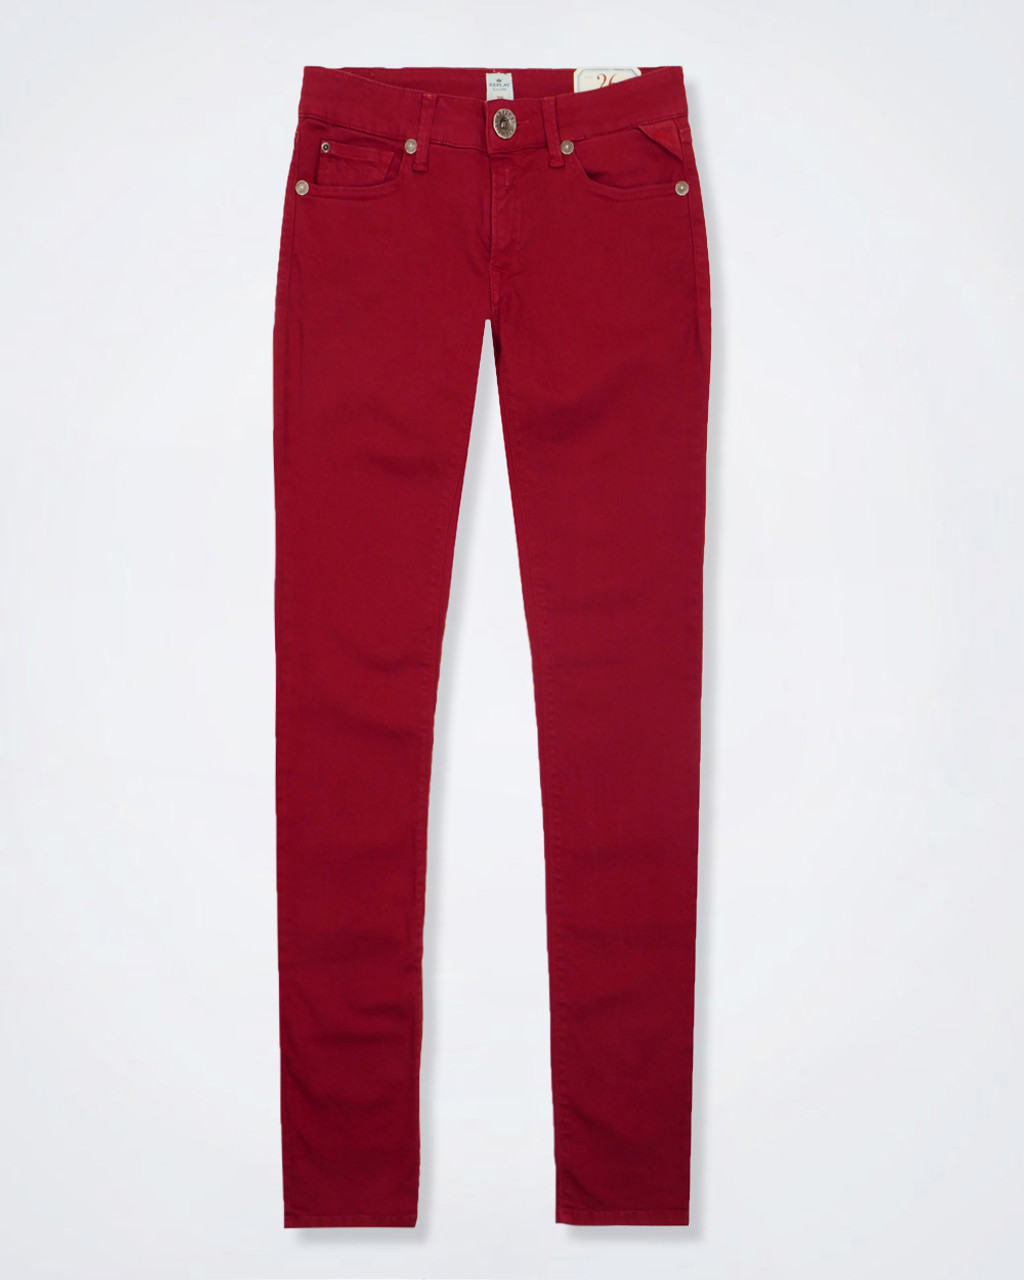 red denim jeans